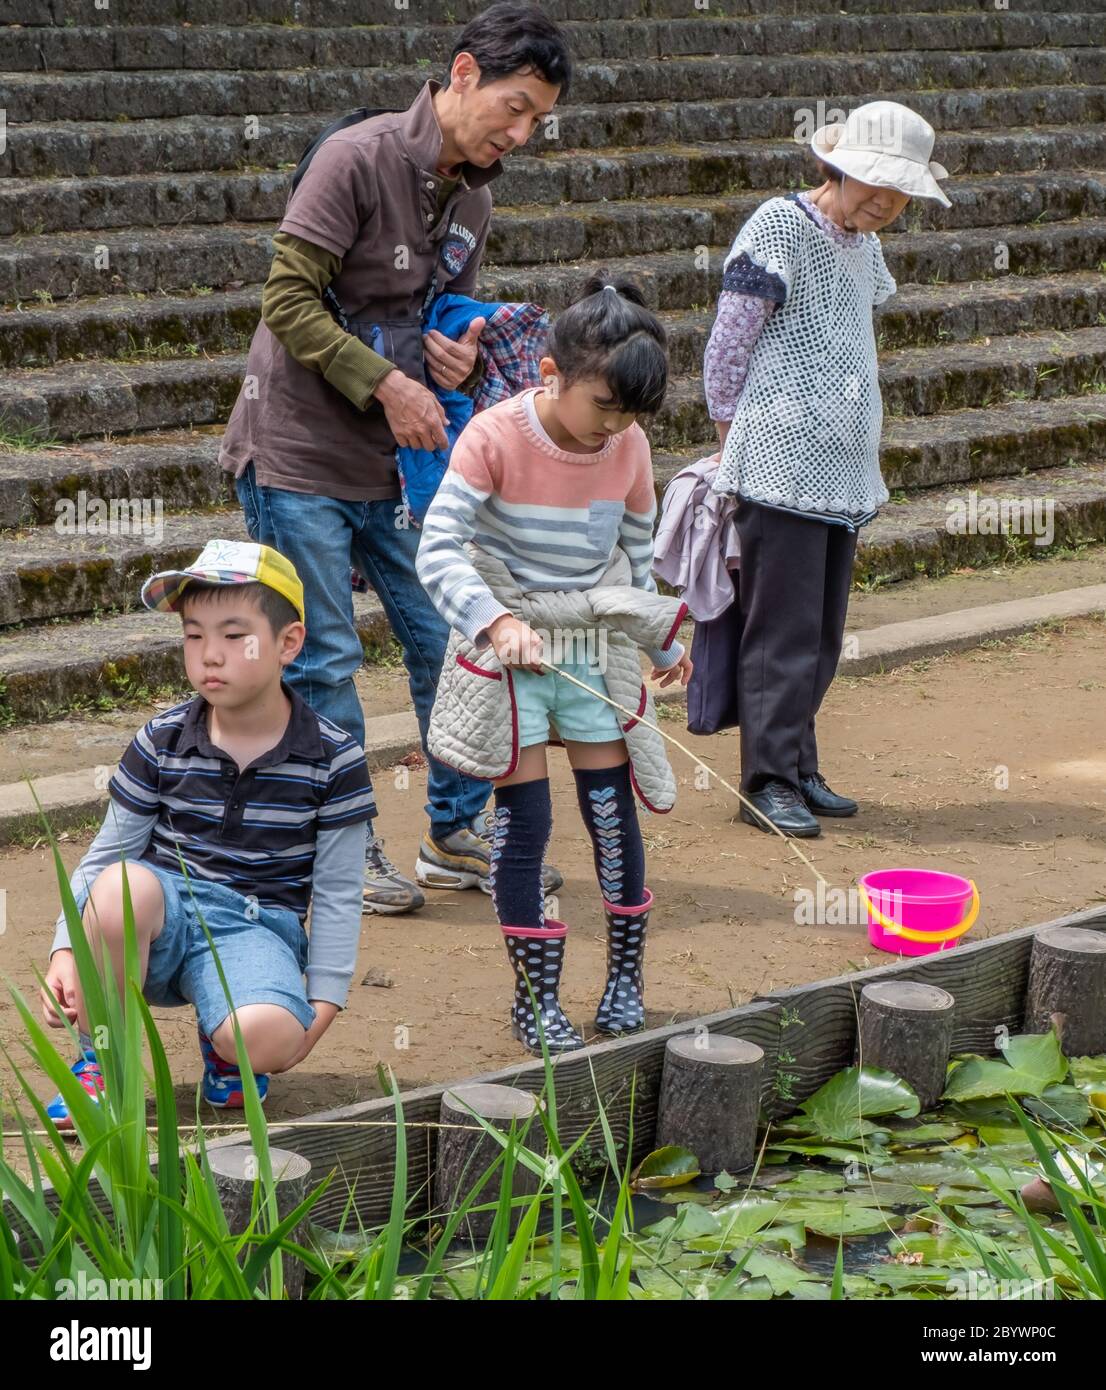 Children and family enjoying fishing in a pond during Suigo Itako Iris Festival, Ibaraki, Japan Stock Photo